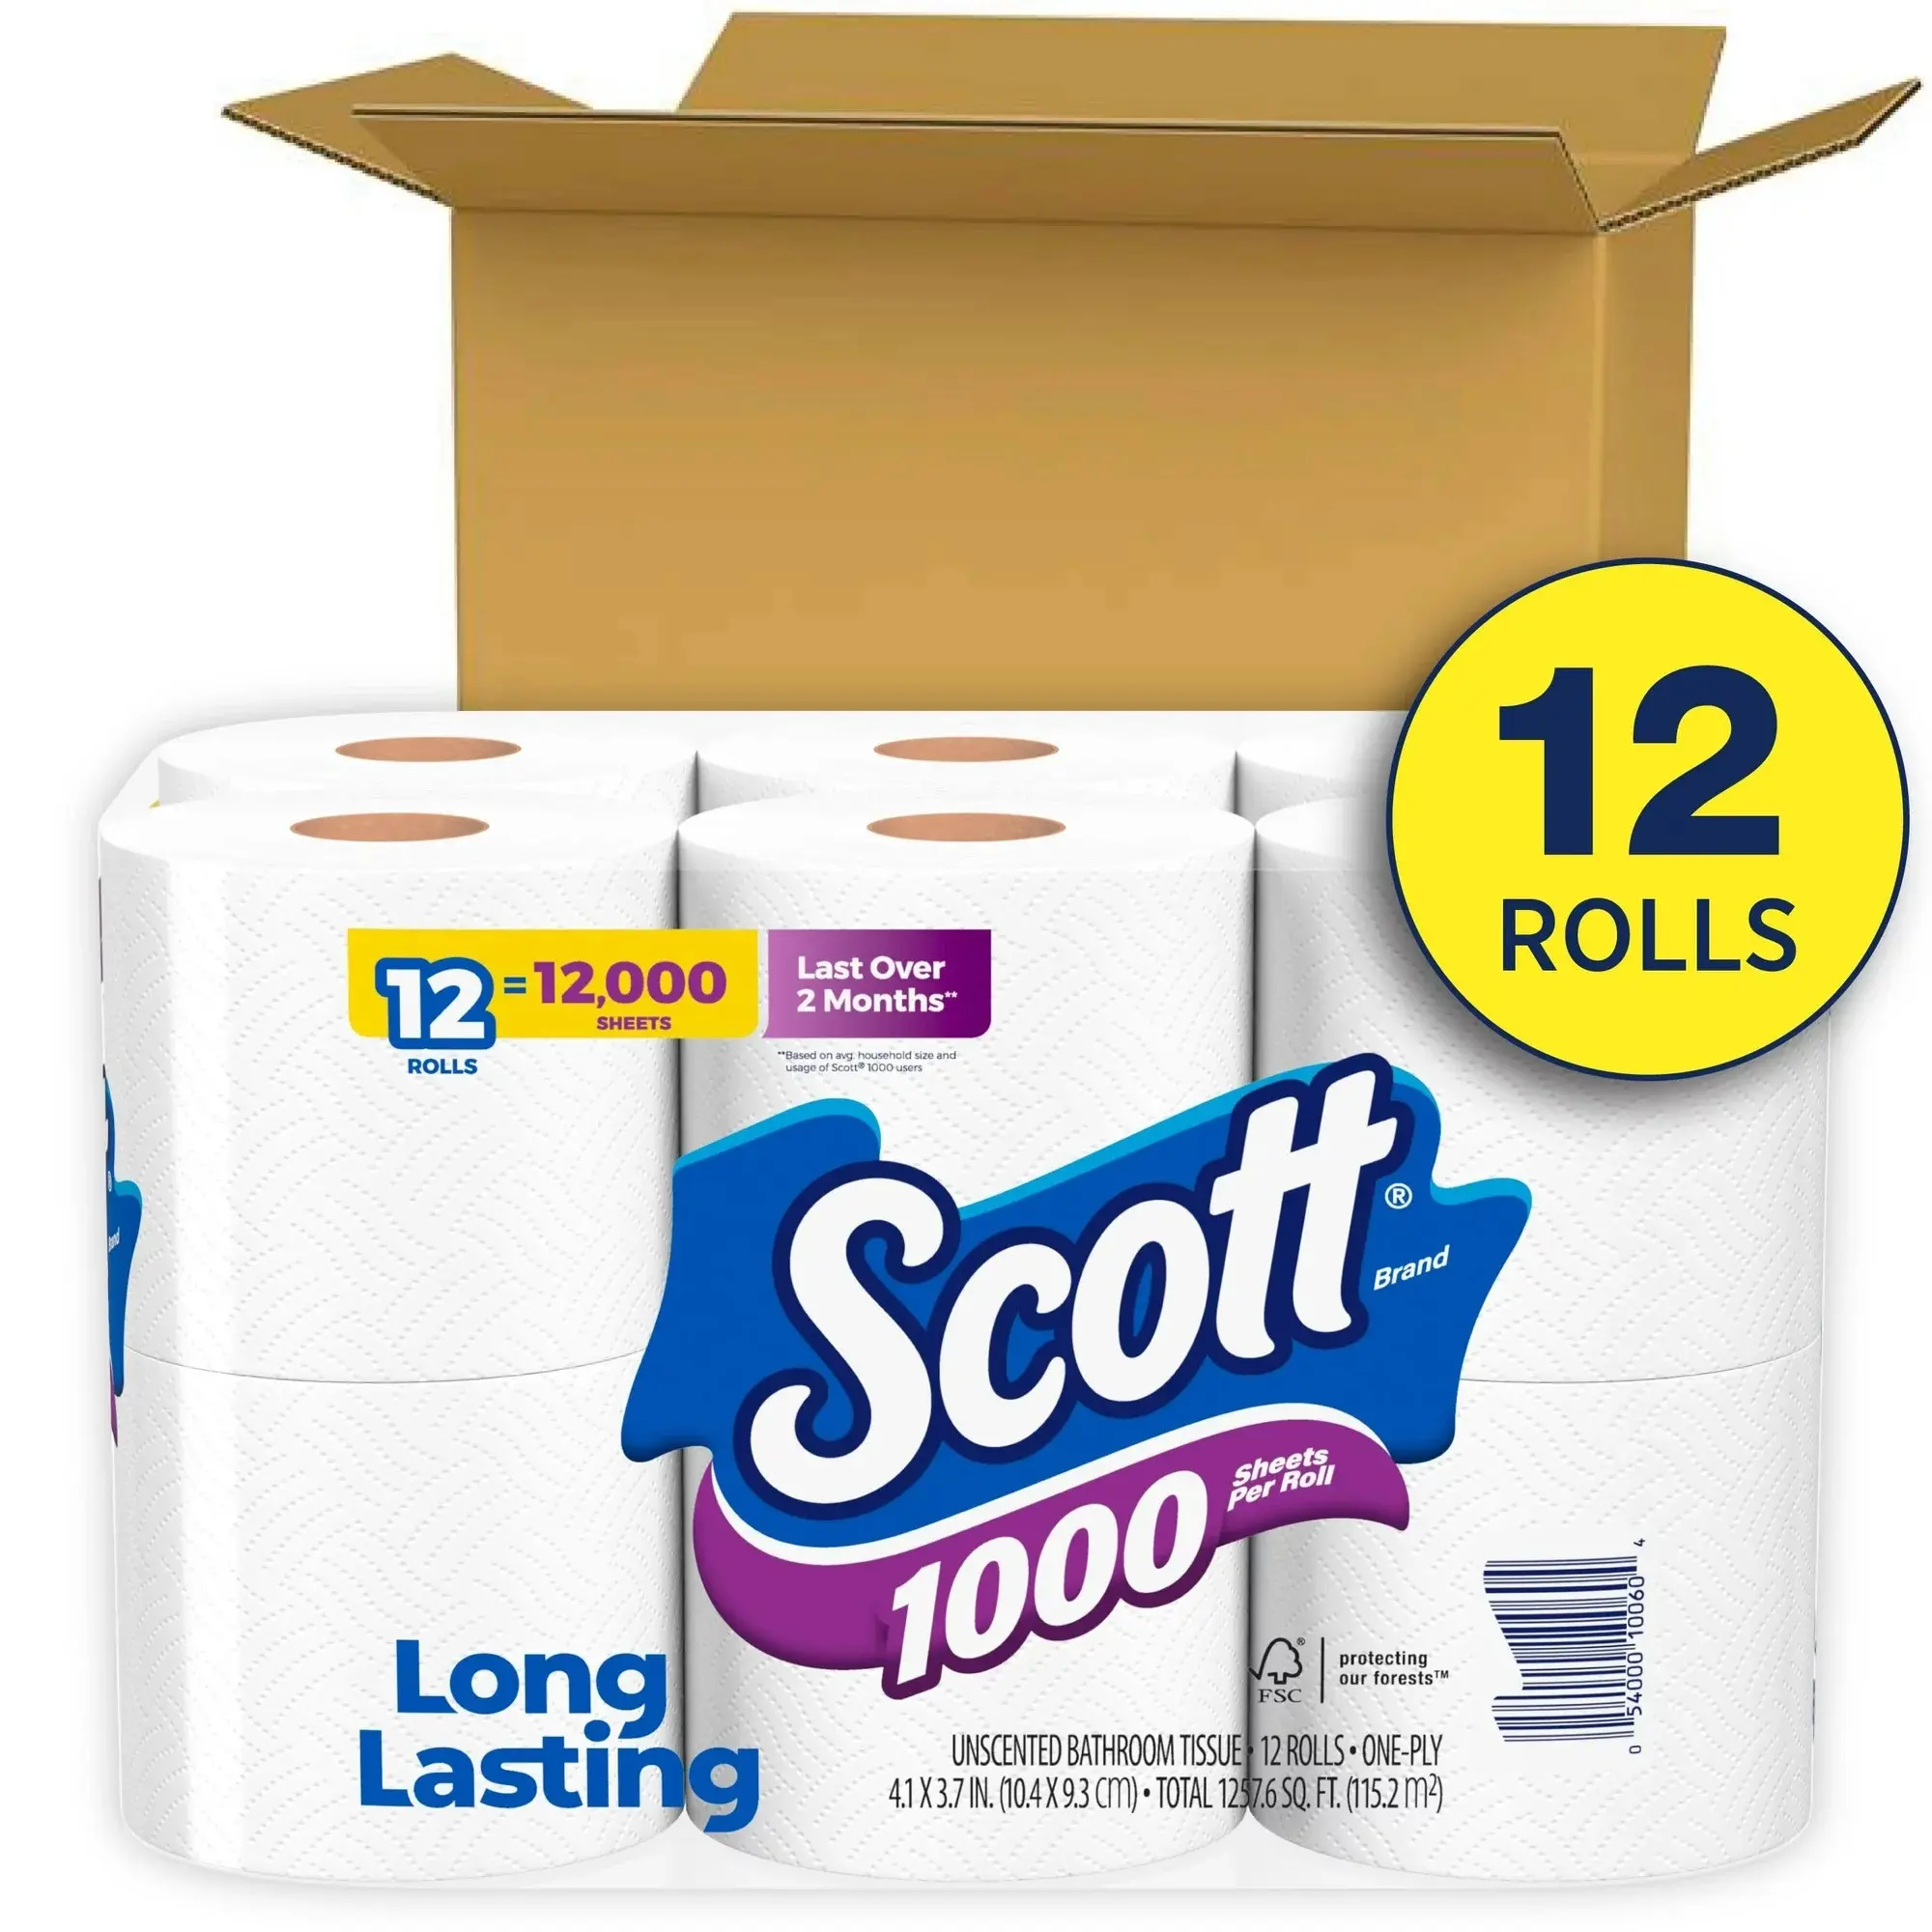 Scott 1000 Toiletten papier, 12 Rollen, 1000 Blatt pro Rolle (insgesamt 12000 Blatt)